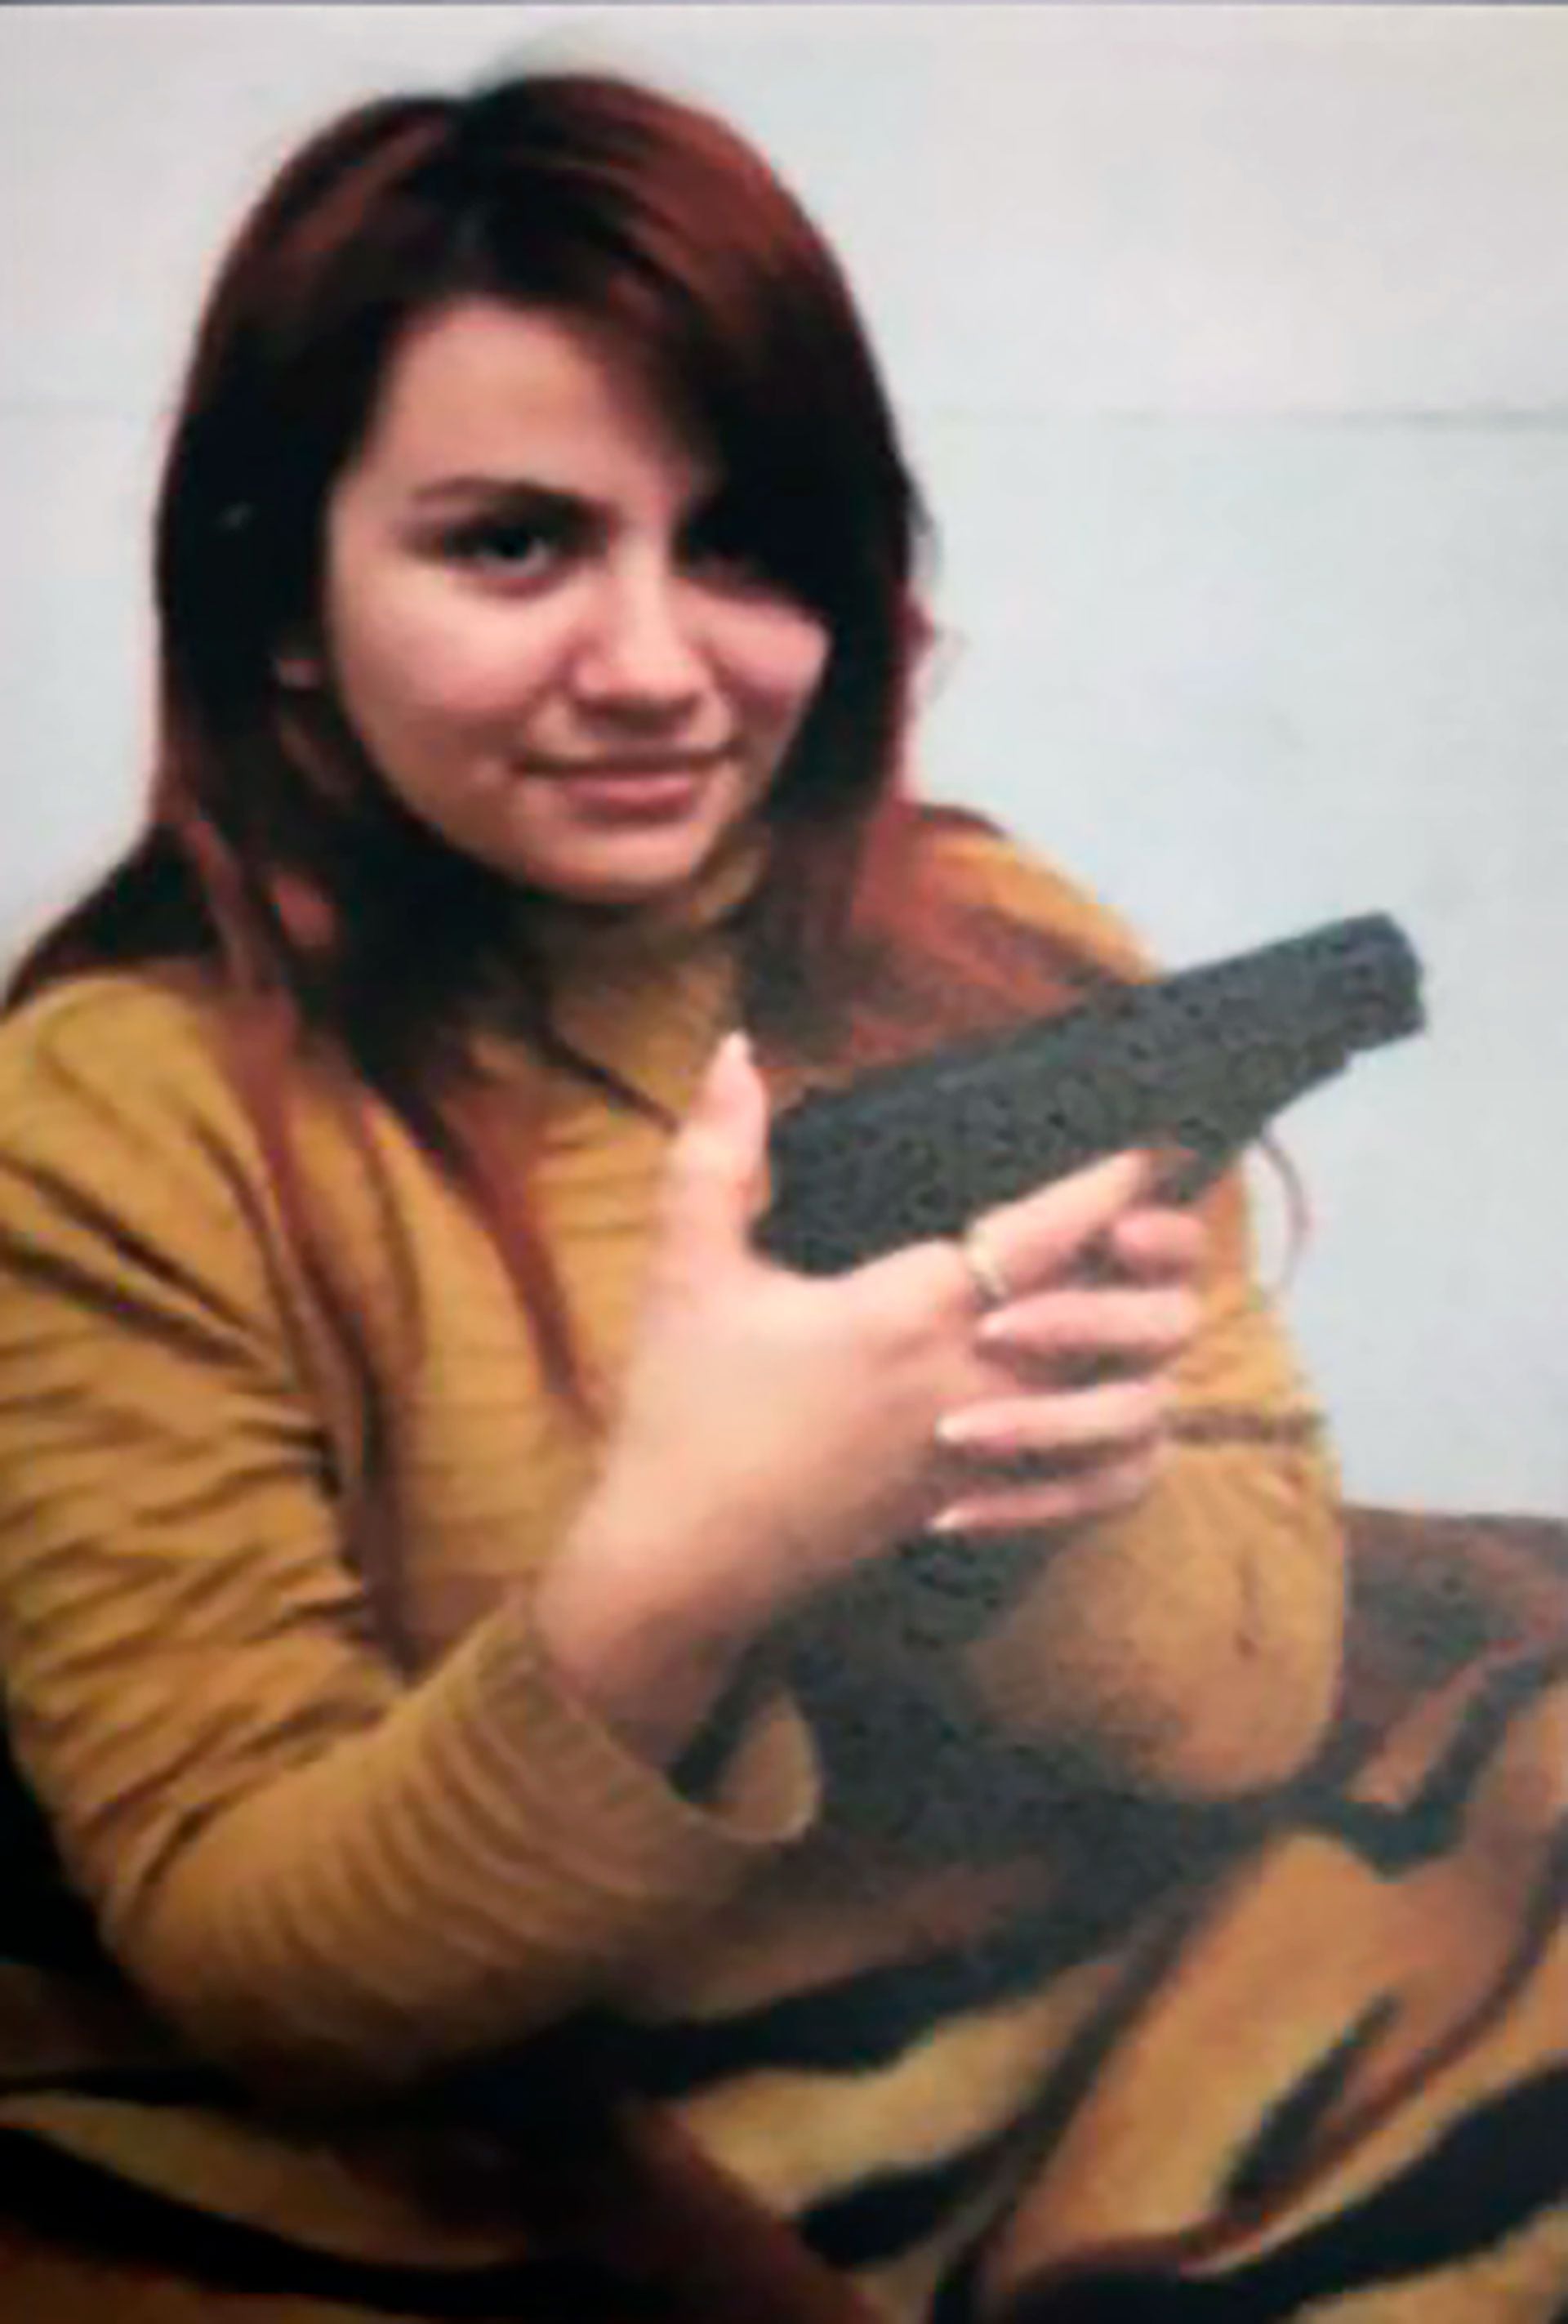 Brenda Uliarte con el arma ataque a cristina kirchner